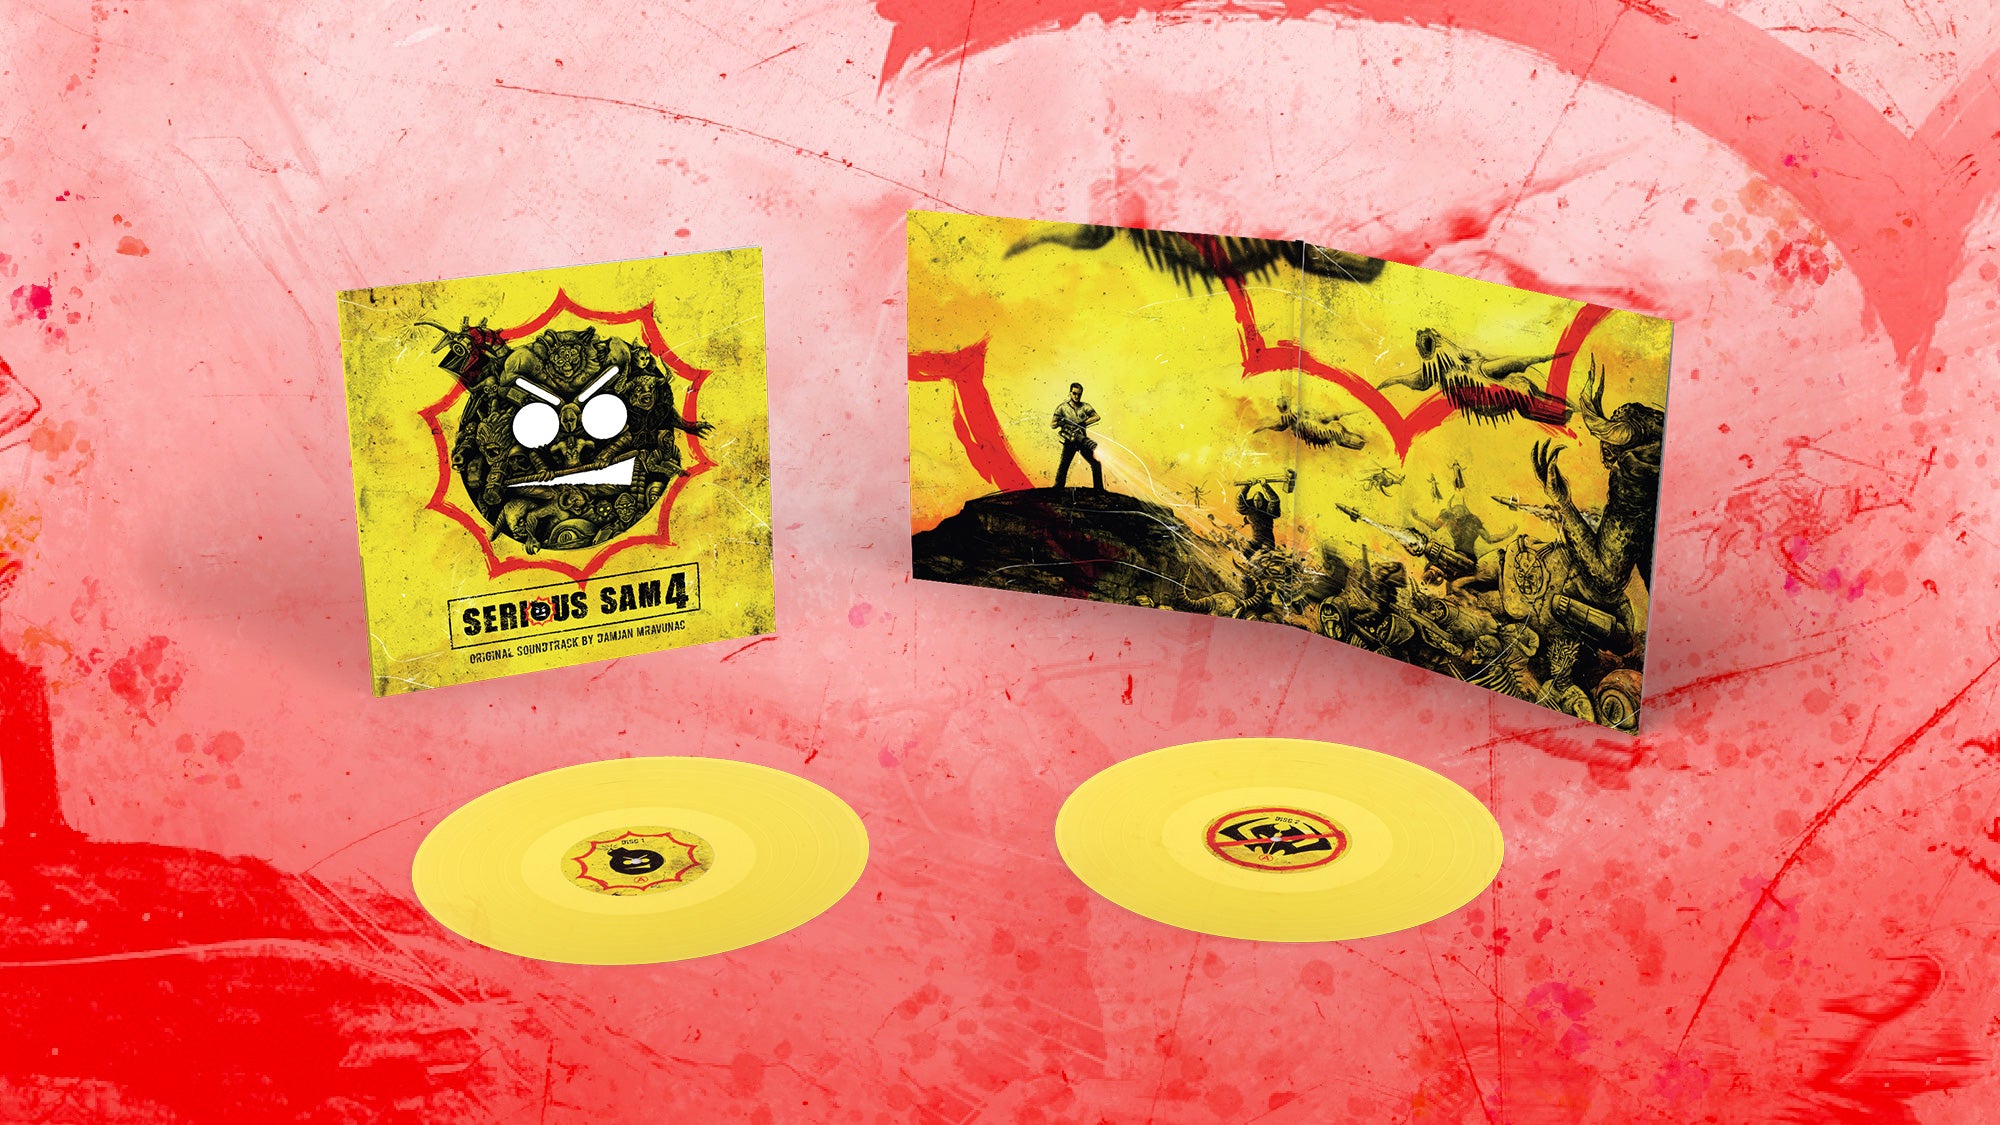 Serious Sam 4 double vinyl